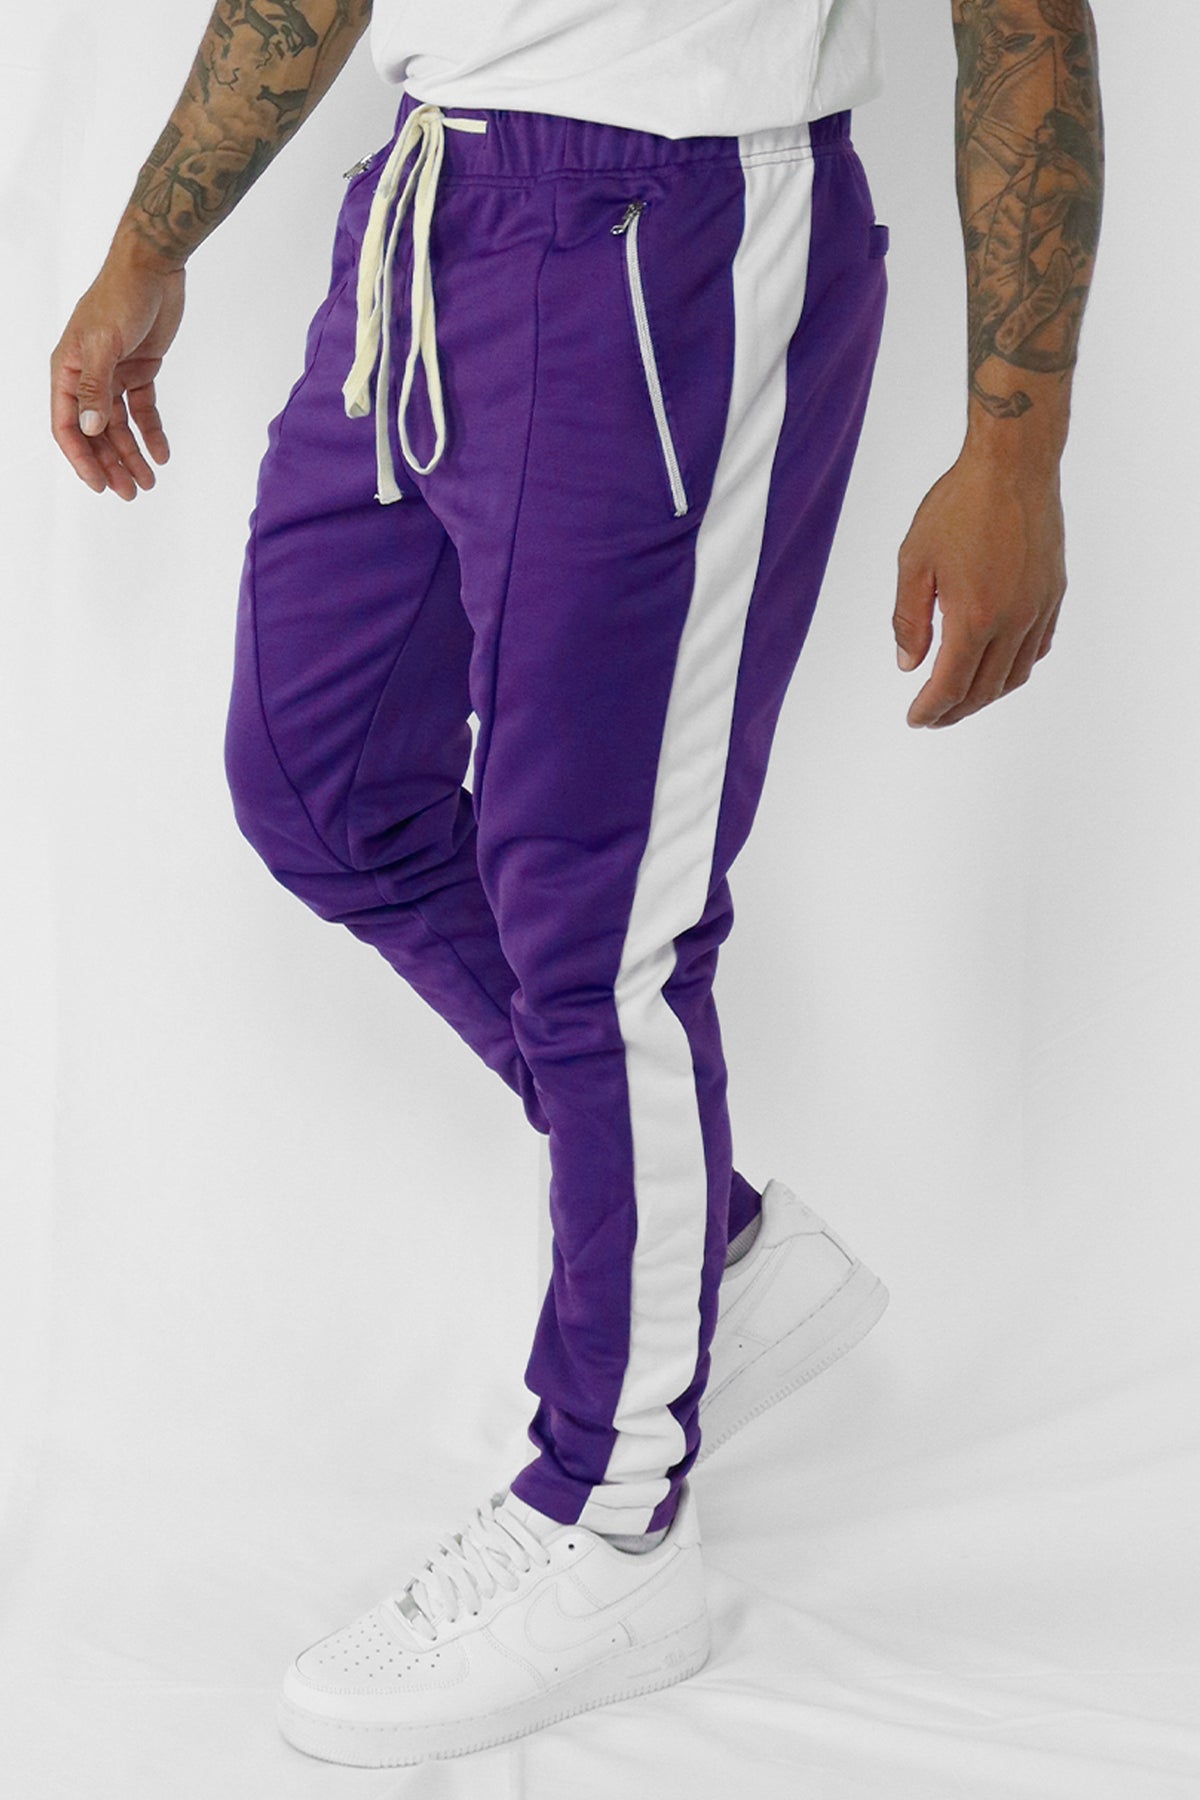 Puma Track Pants  Buy Puma Zippered Jersey Womens Purple Trackpants Online   Nykaa Fashion